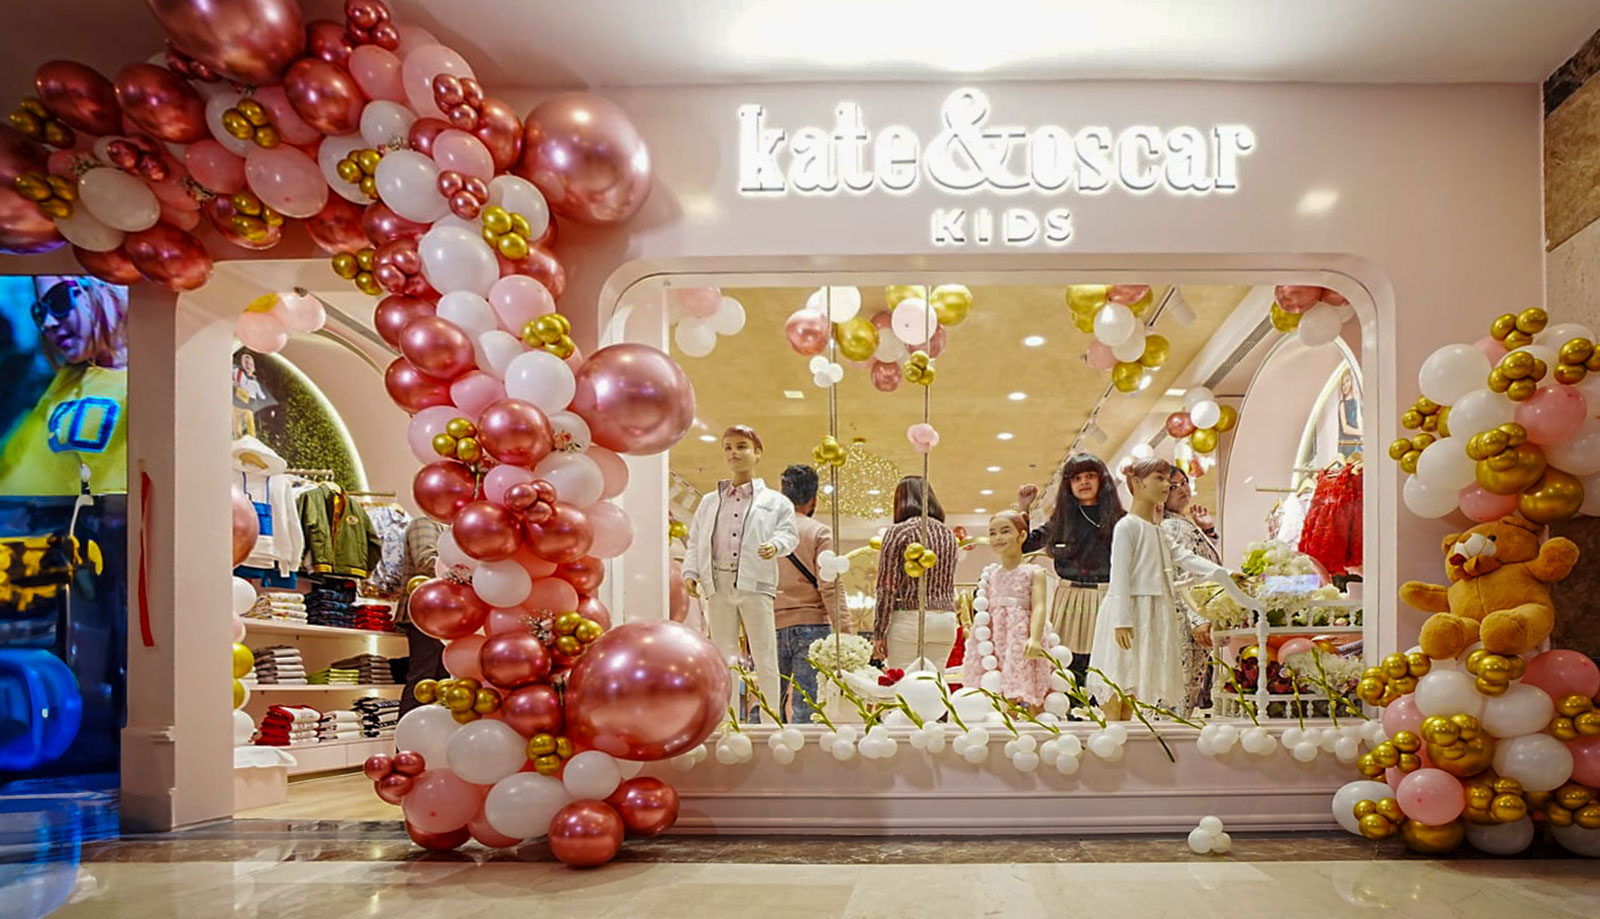 Kate & Oscar kids apparel store look